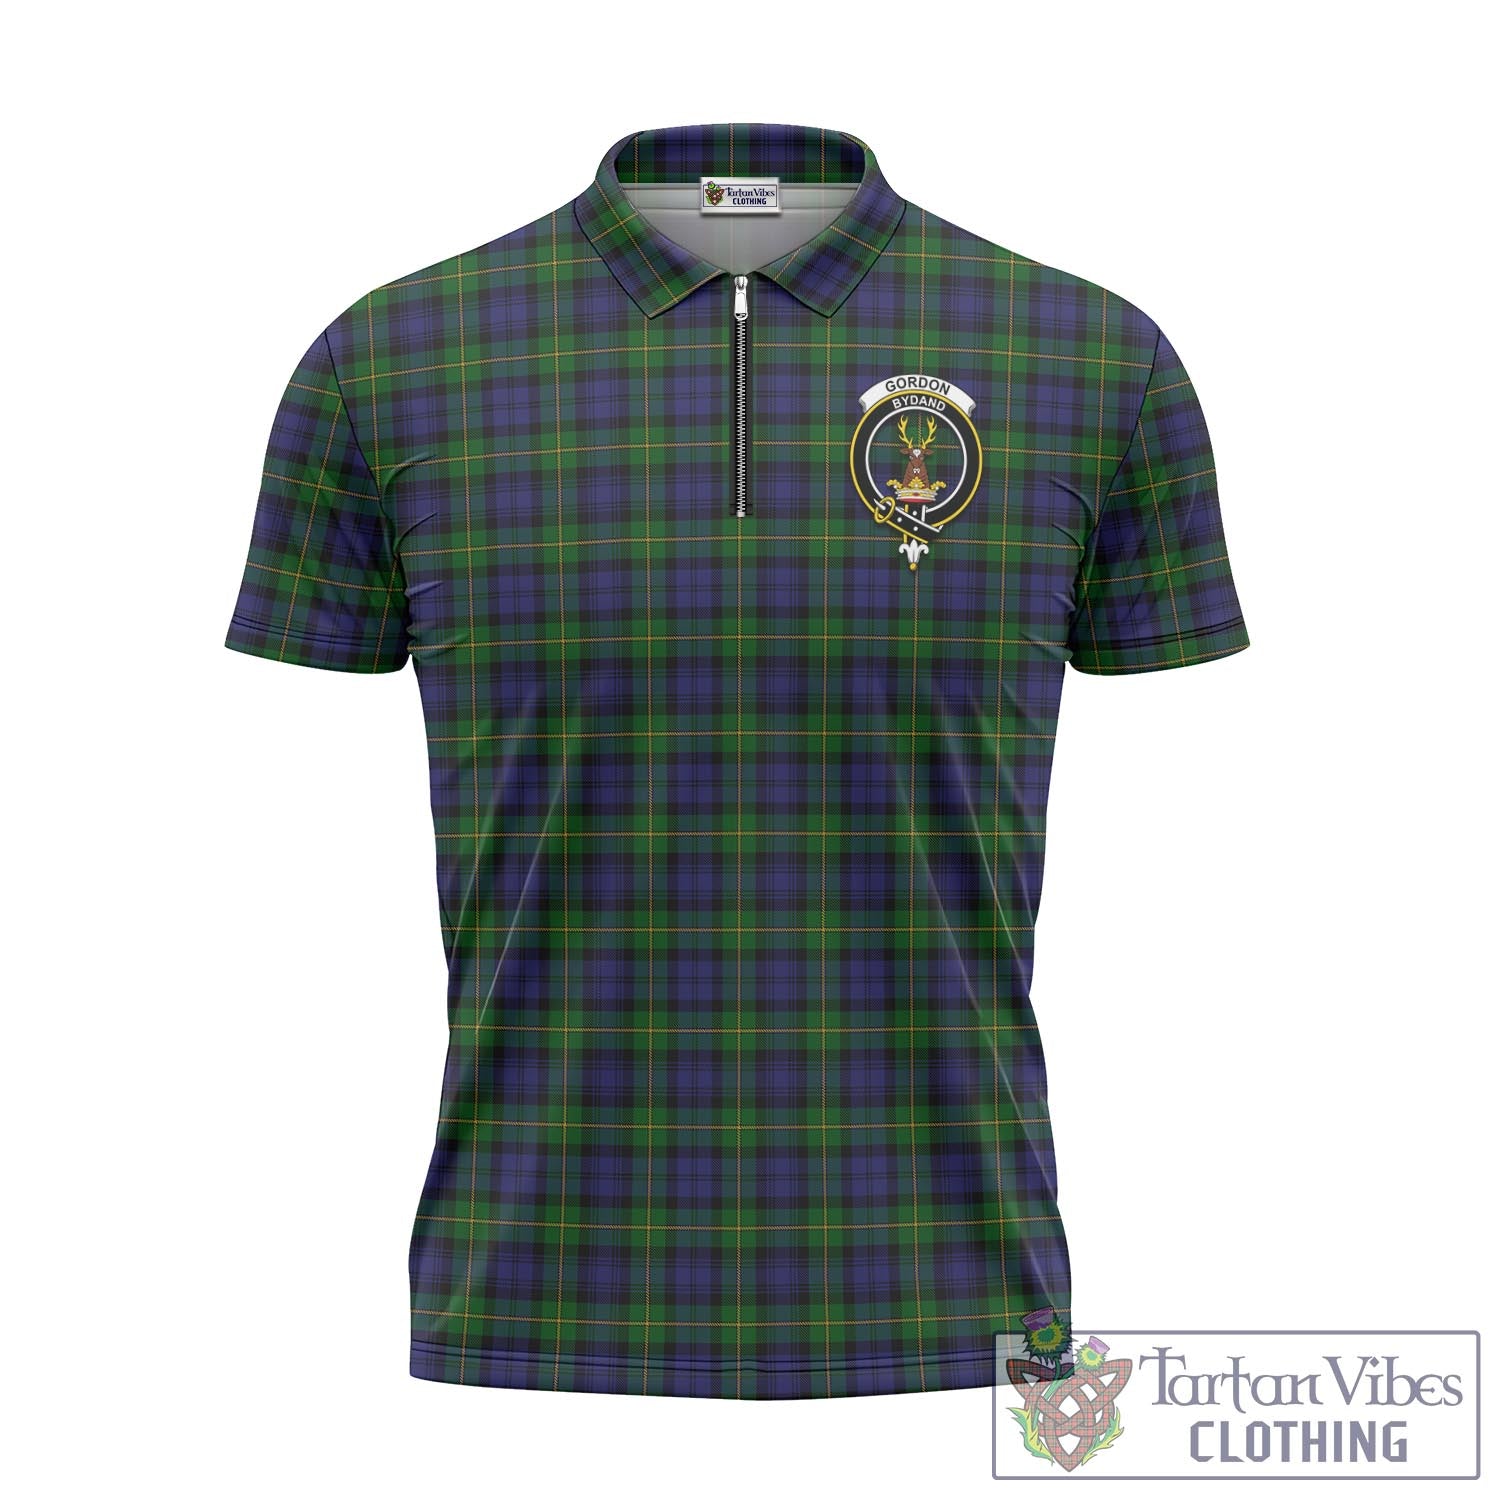 Tartan Vibes Clothing Gordon Tartan Zipper Polo Shirt with Family Crest